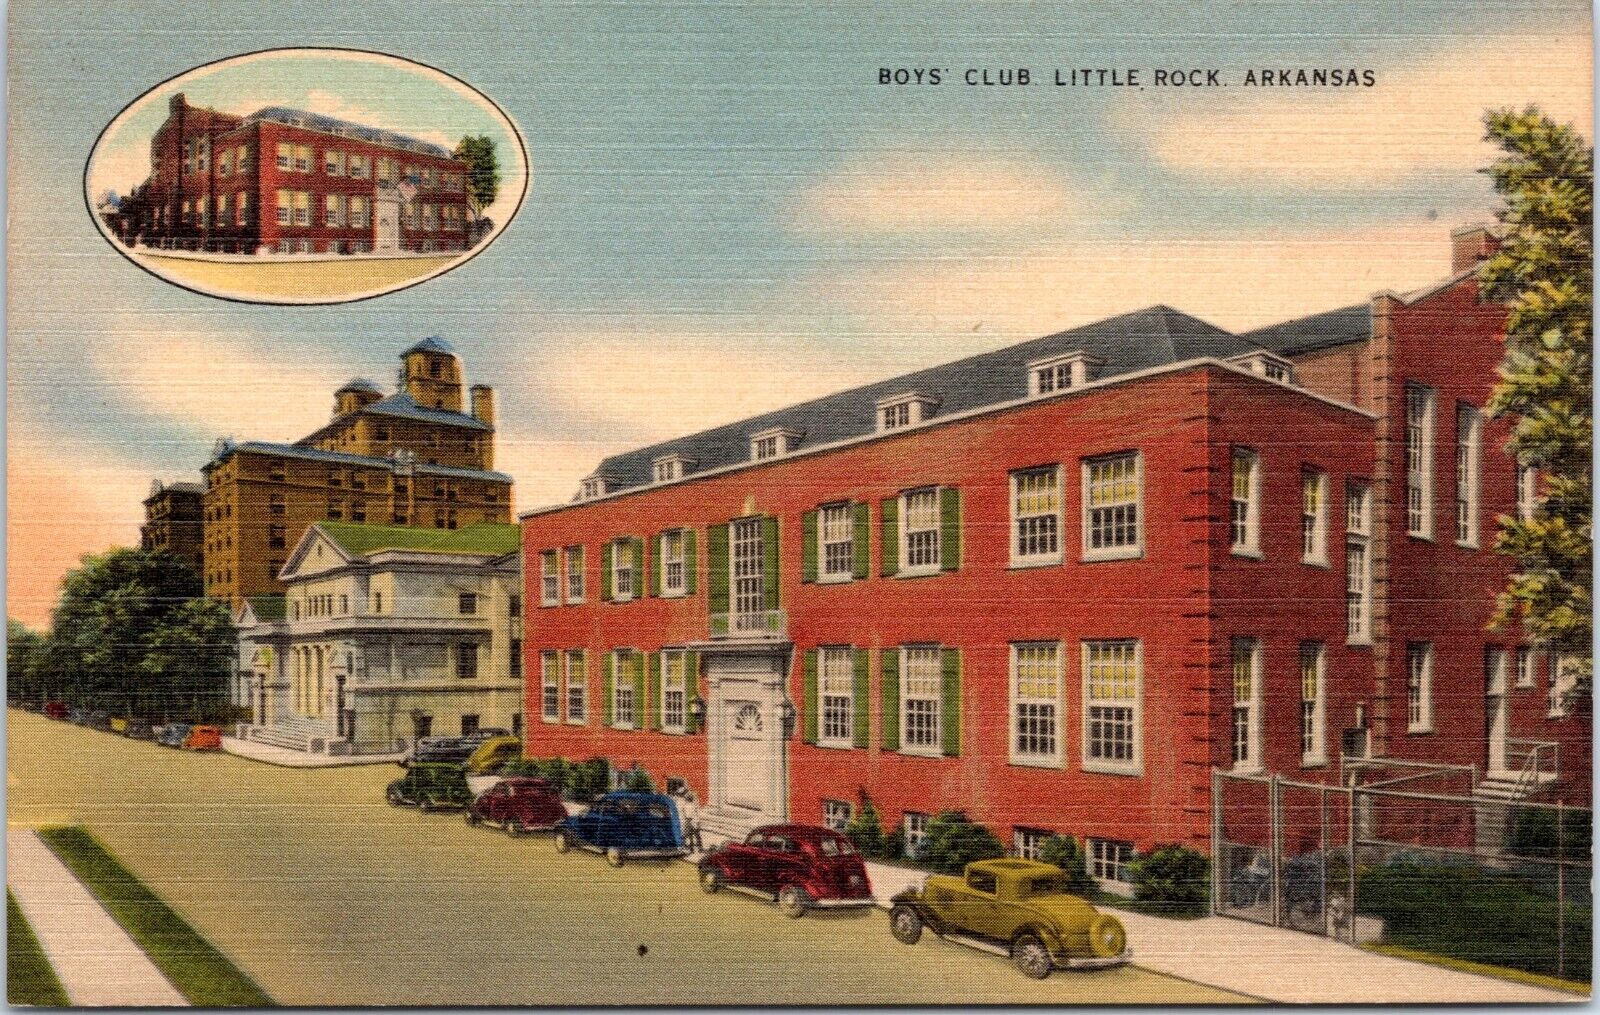 Boys Club, Storer Building, Little Rock, Arkansas - c1940s Linen Postcard